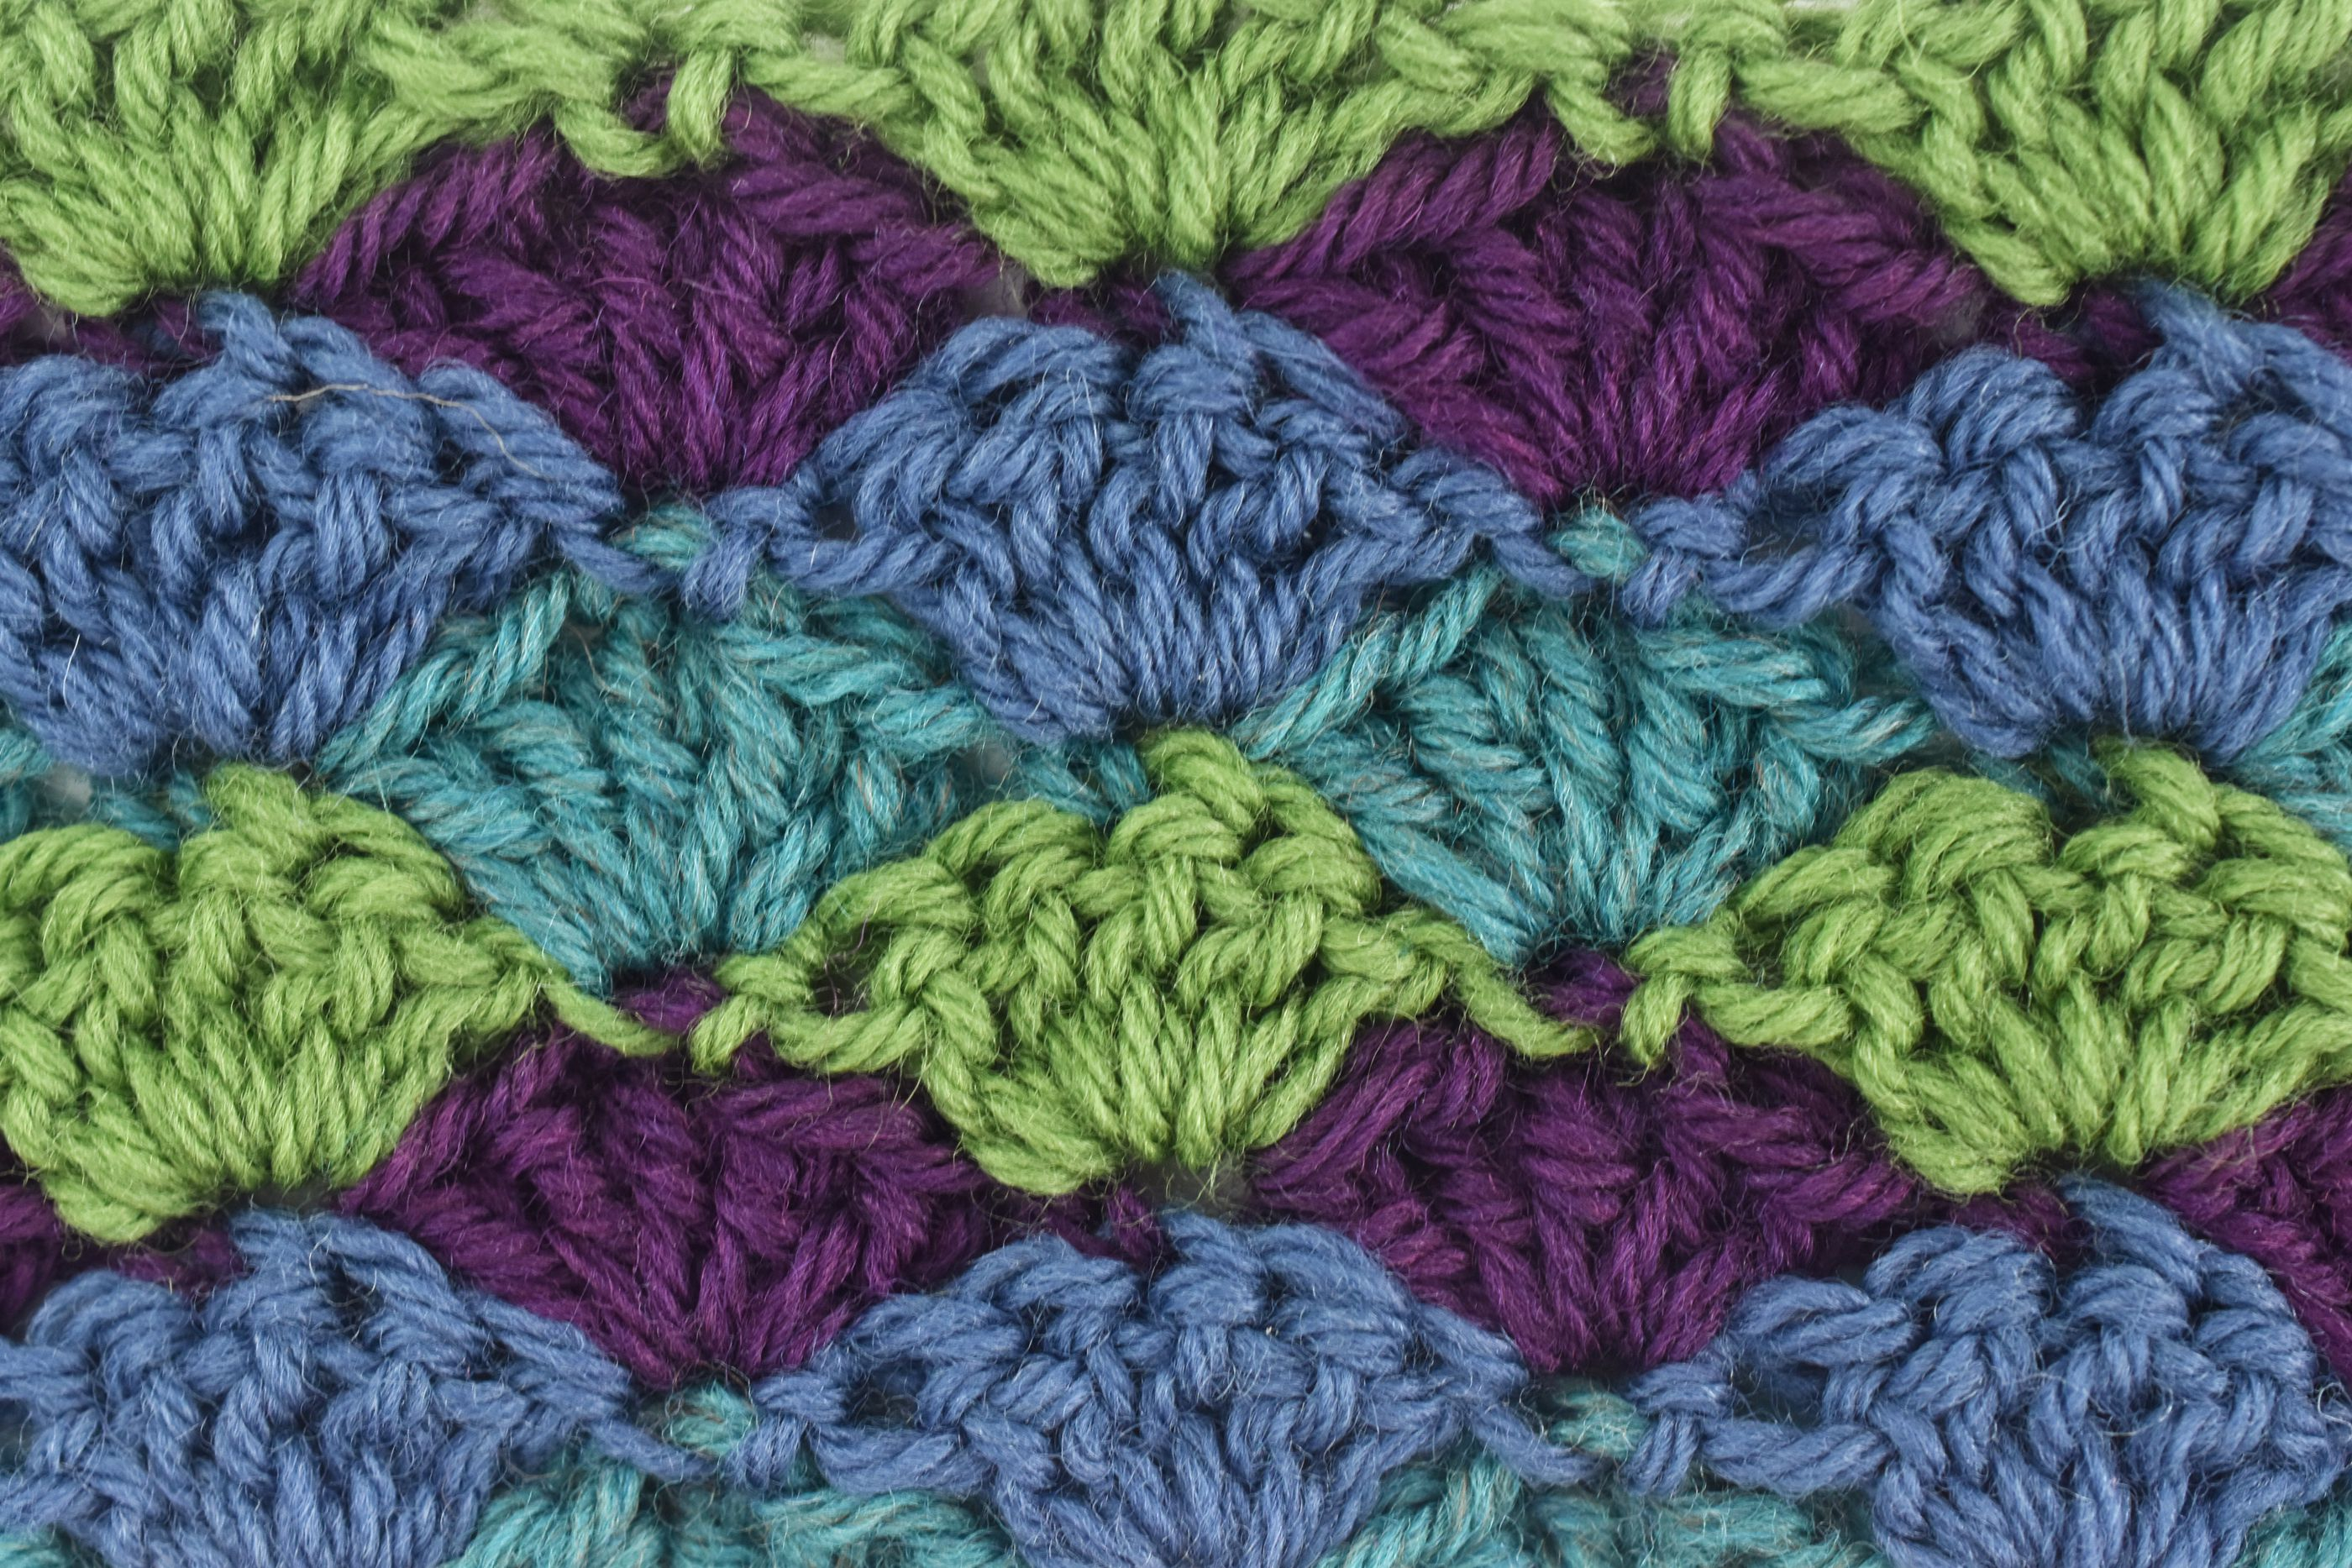 Shell Crochet Pattern How To Crochet Shell Stitch